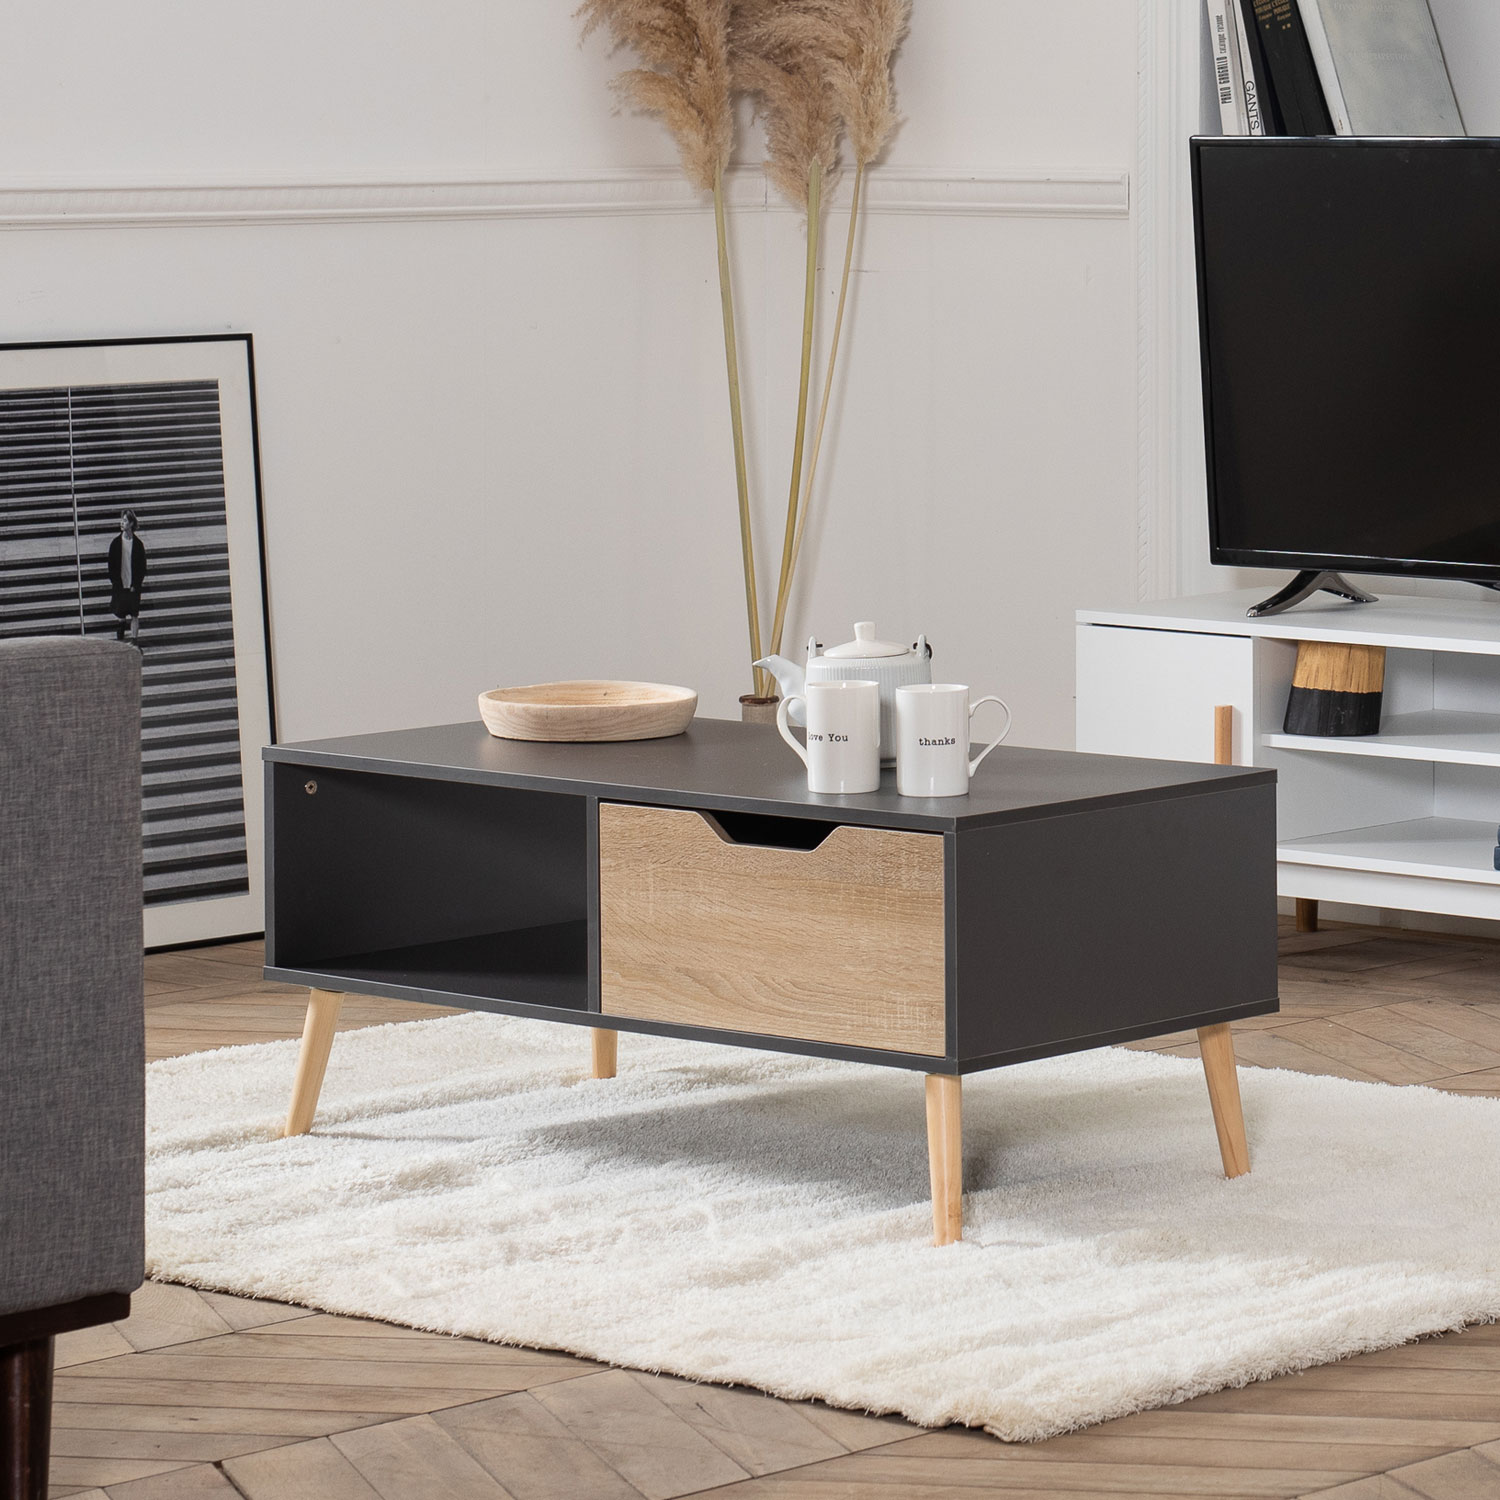 FREJA mesa baja gris de estilo escandinavo con cajón